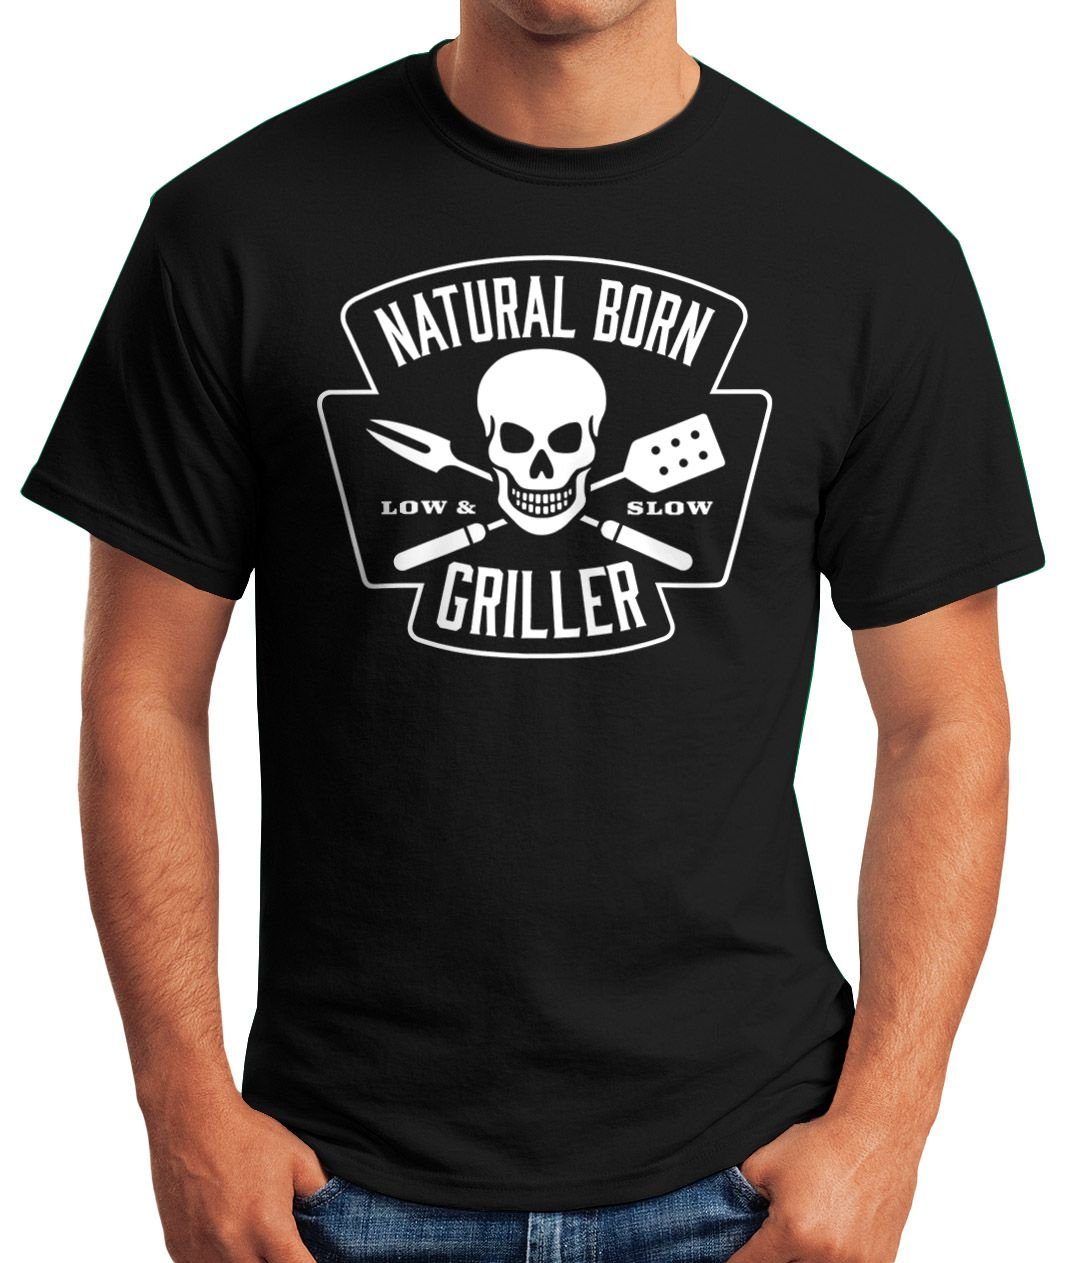 MoonWorks Print-Shirt Herren Print Sommer Fun-Shirt T-Shirt BBQ Food Grillen Natural Moonworks® Born schwarz mit Tee Griller Barbecue